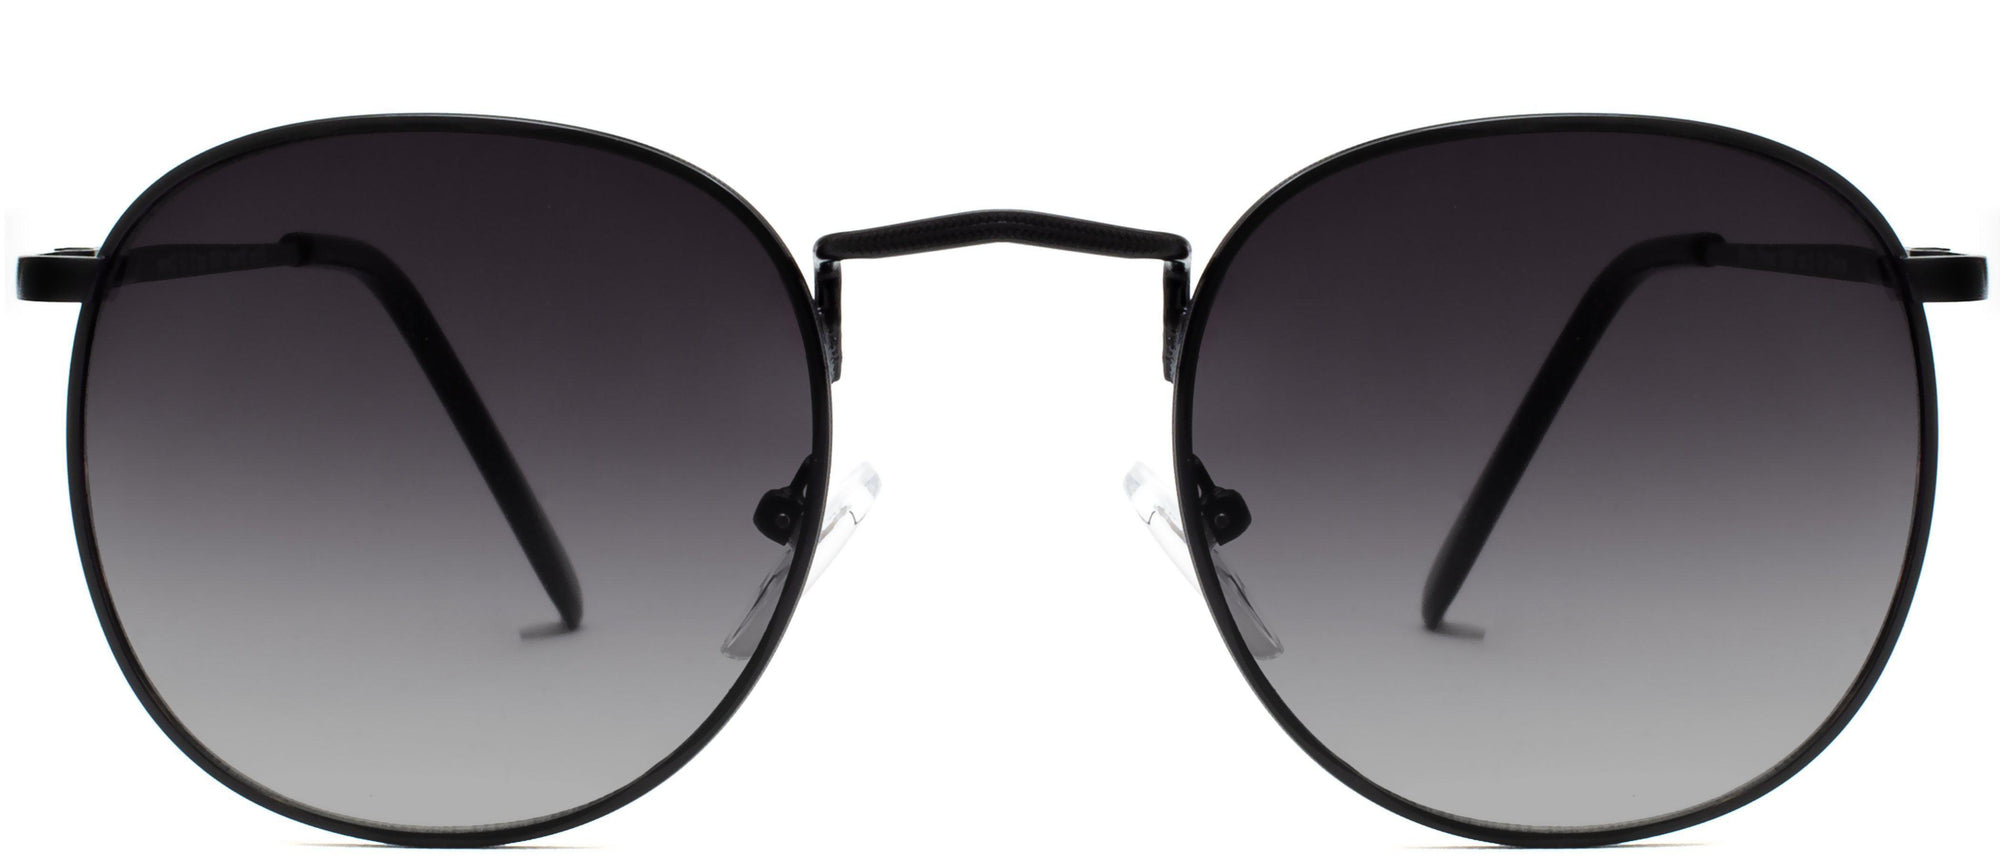 Elton Street - Sunglasses NYS Collection Eyewear